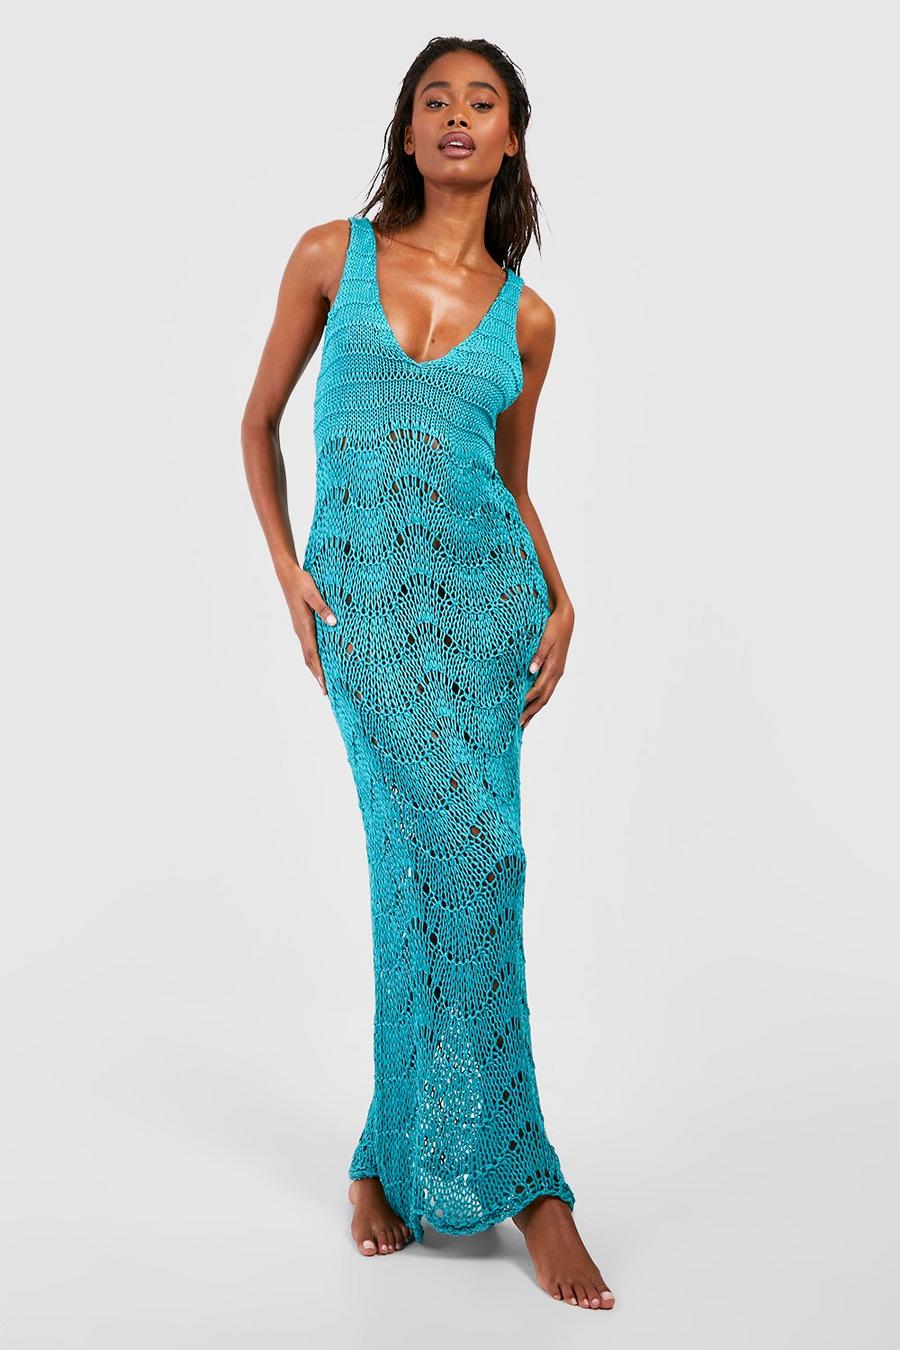 Aqua blue Crochet Scallop Scoop Beach Dress